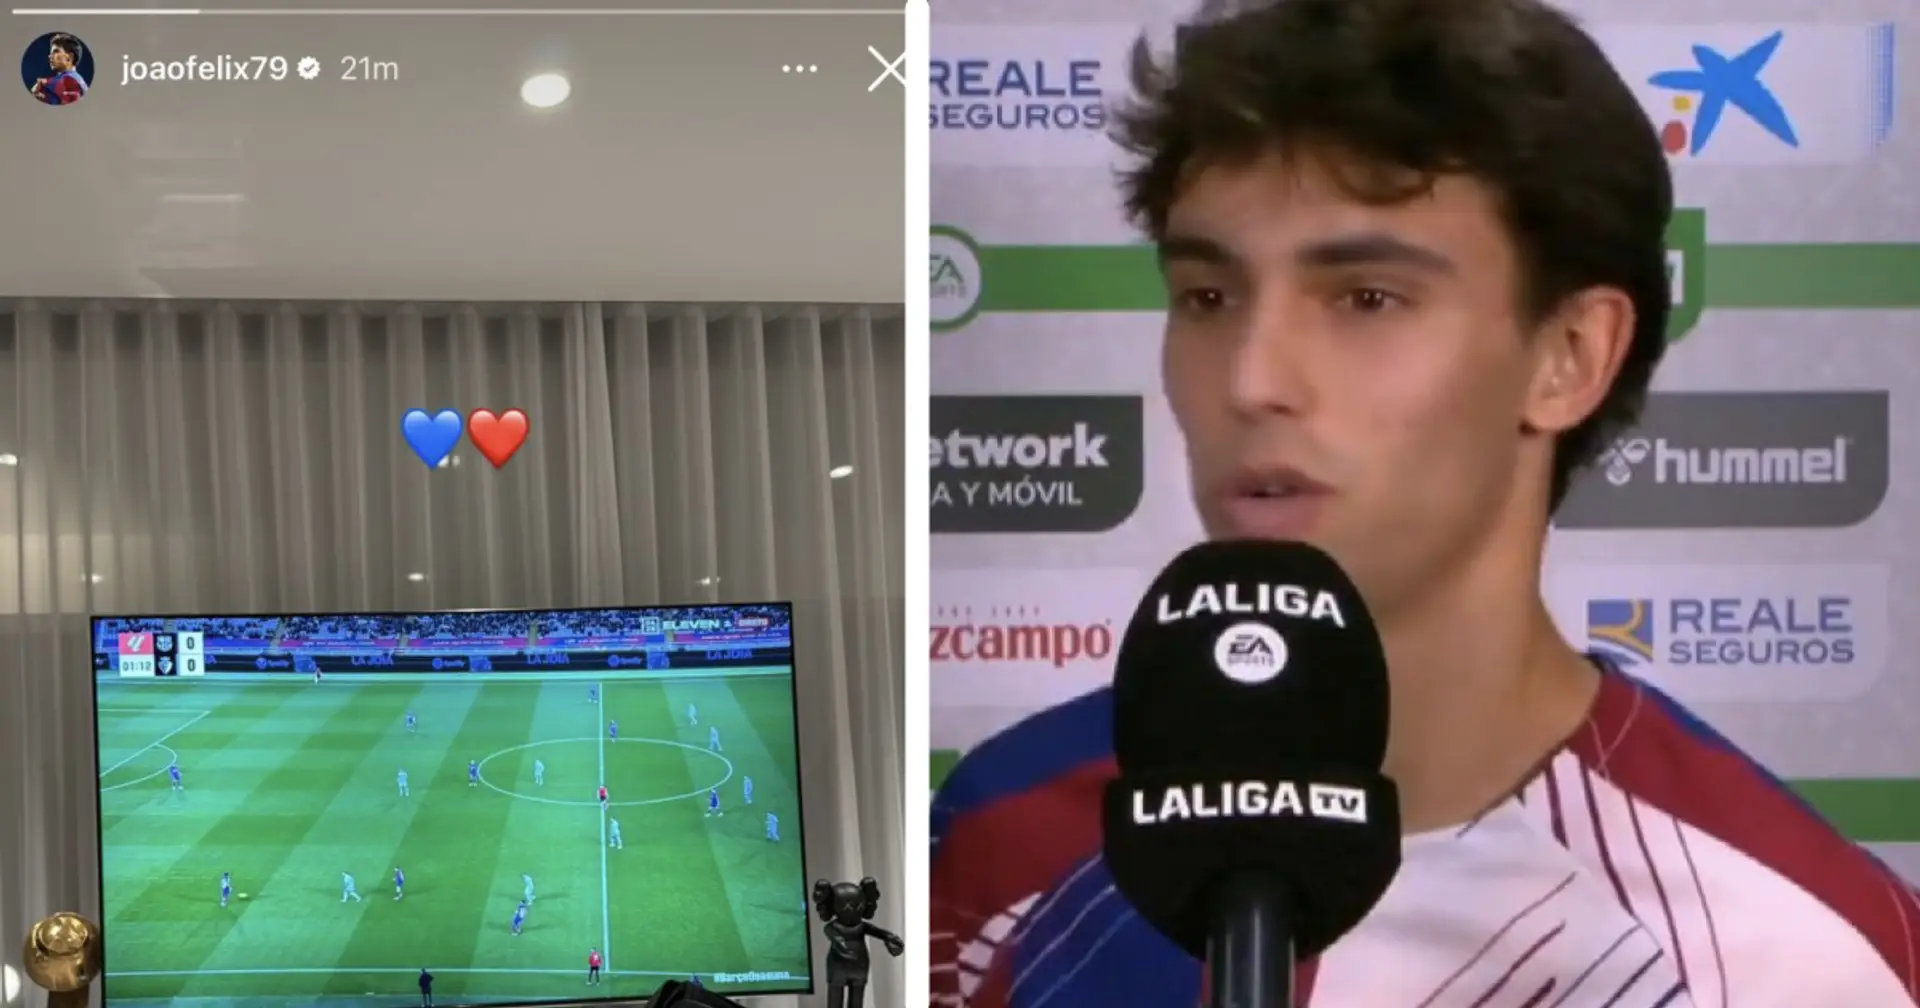 Joao Felix displays injured leg as he's watching Barca v Osasuna live